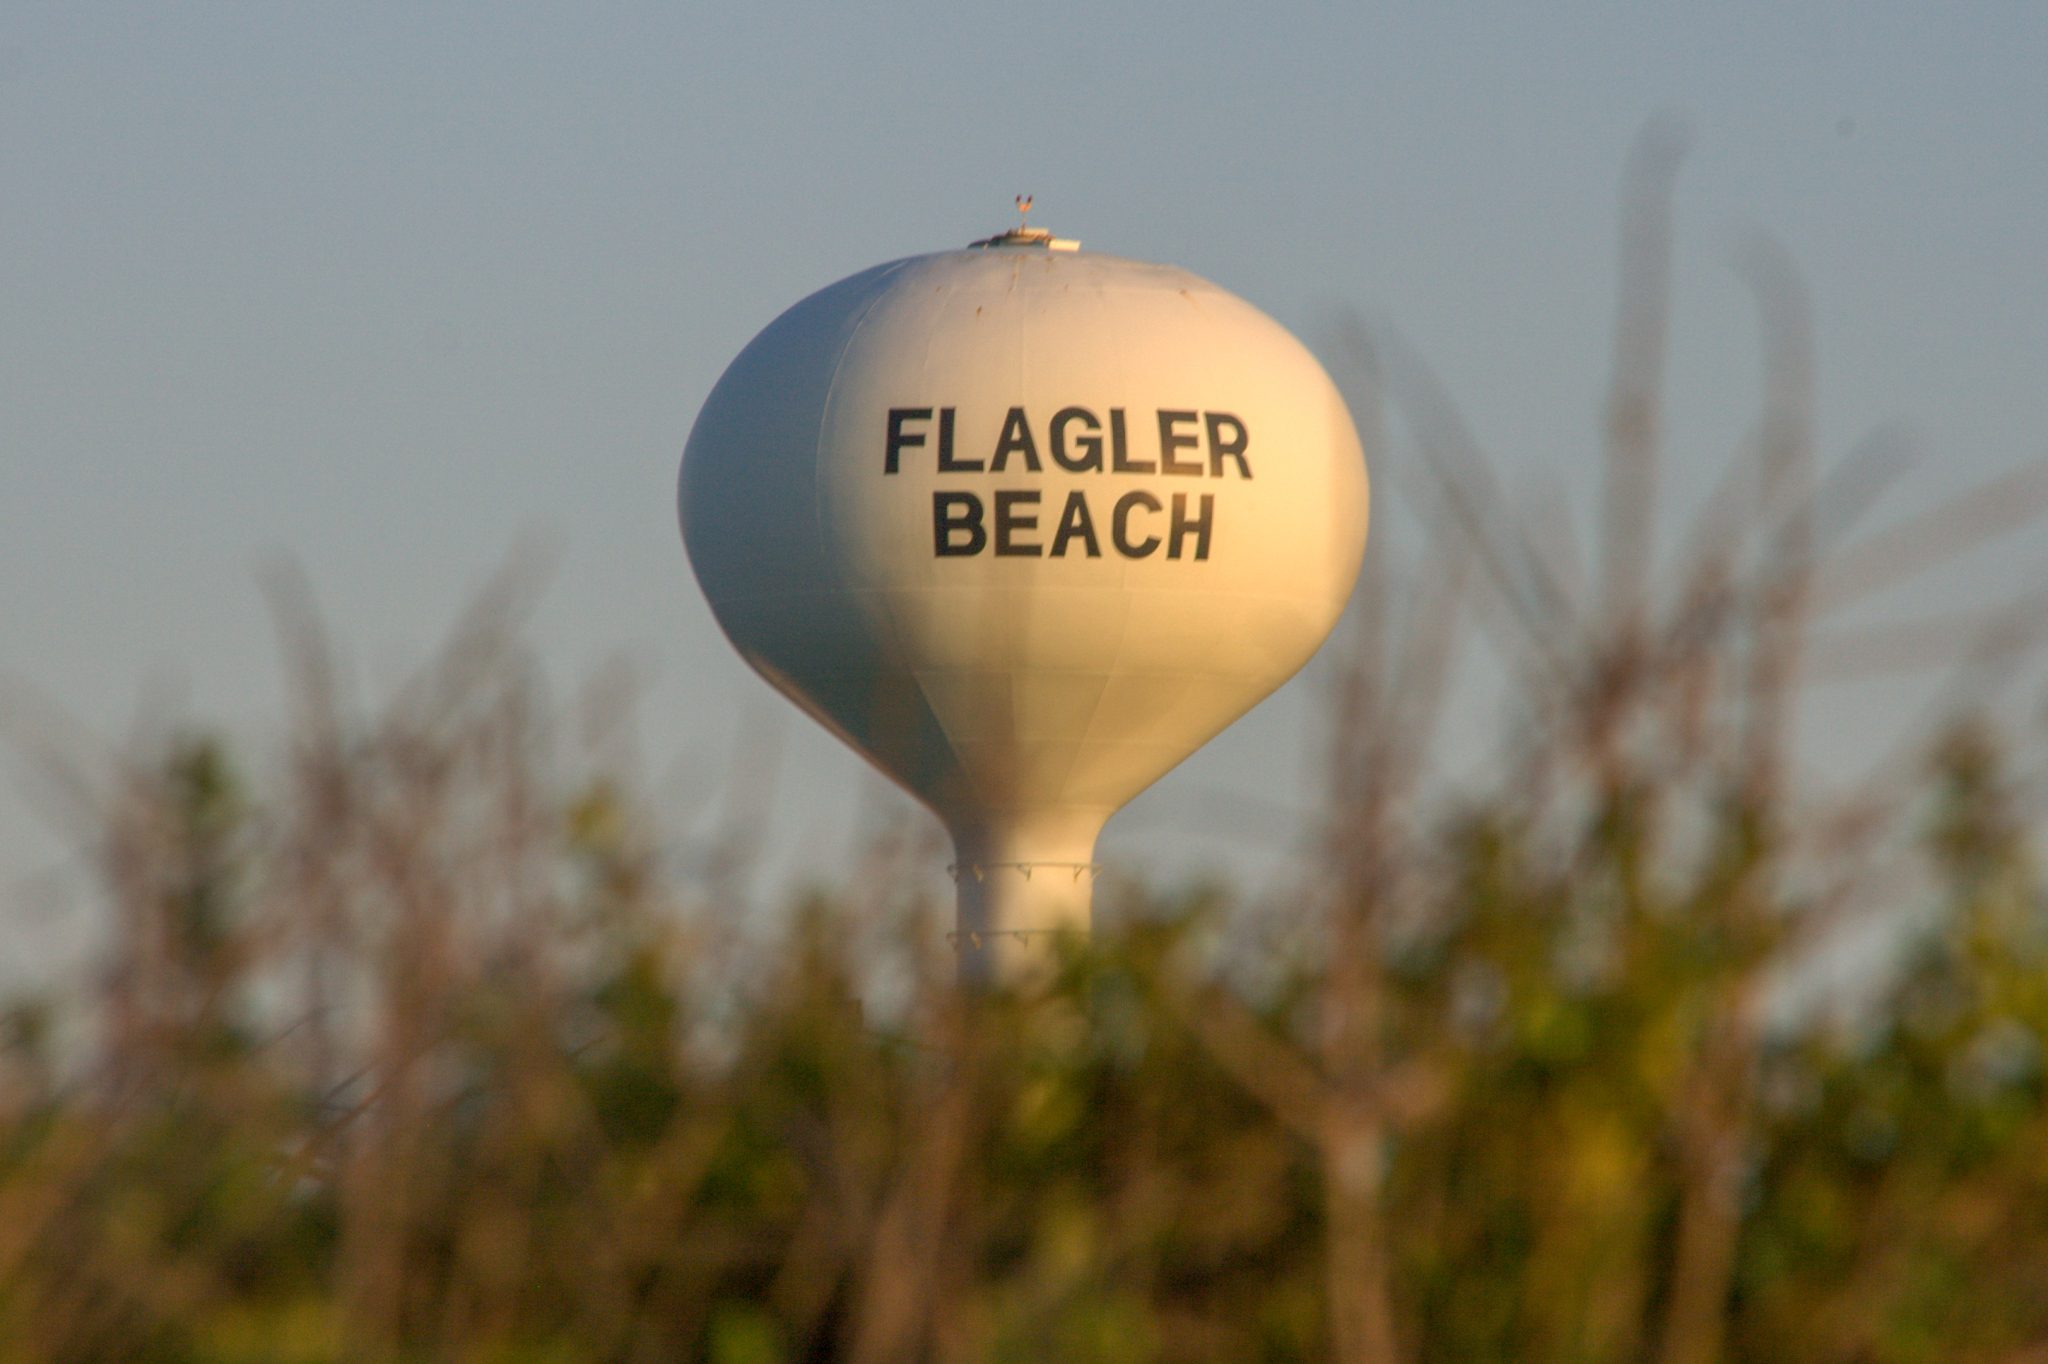 Flagler Beach water tower